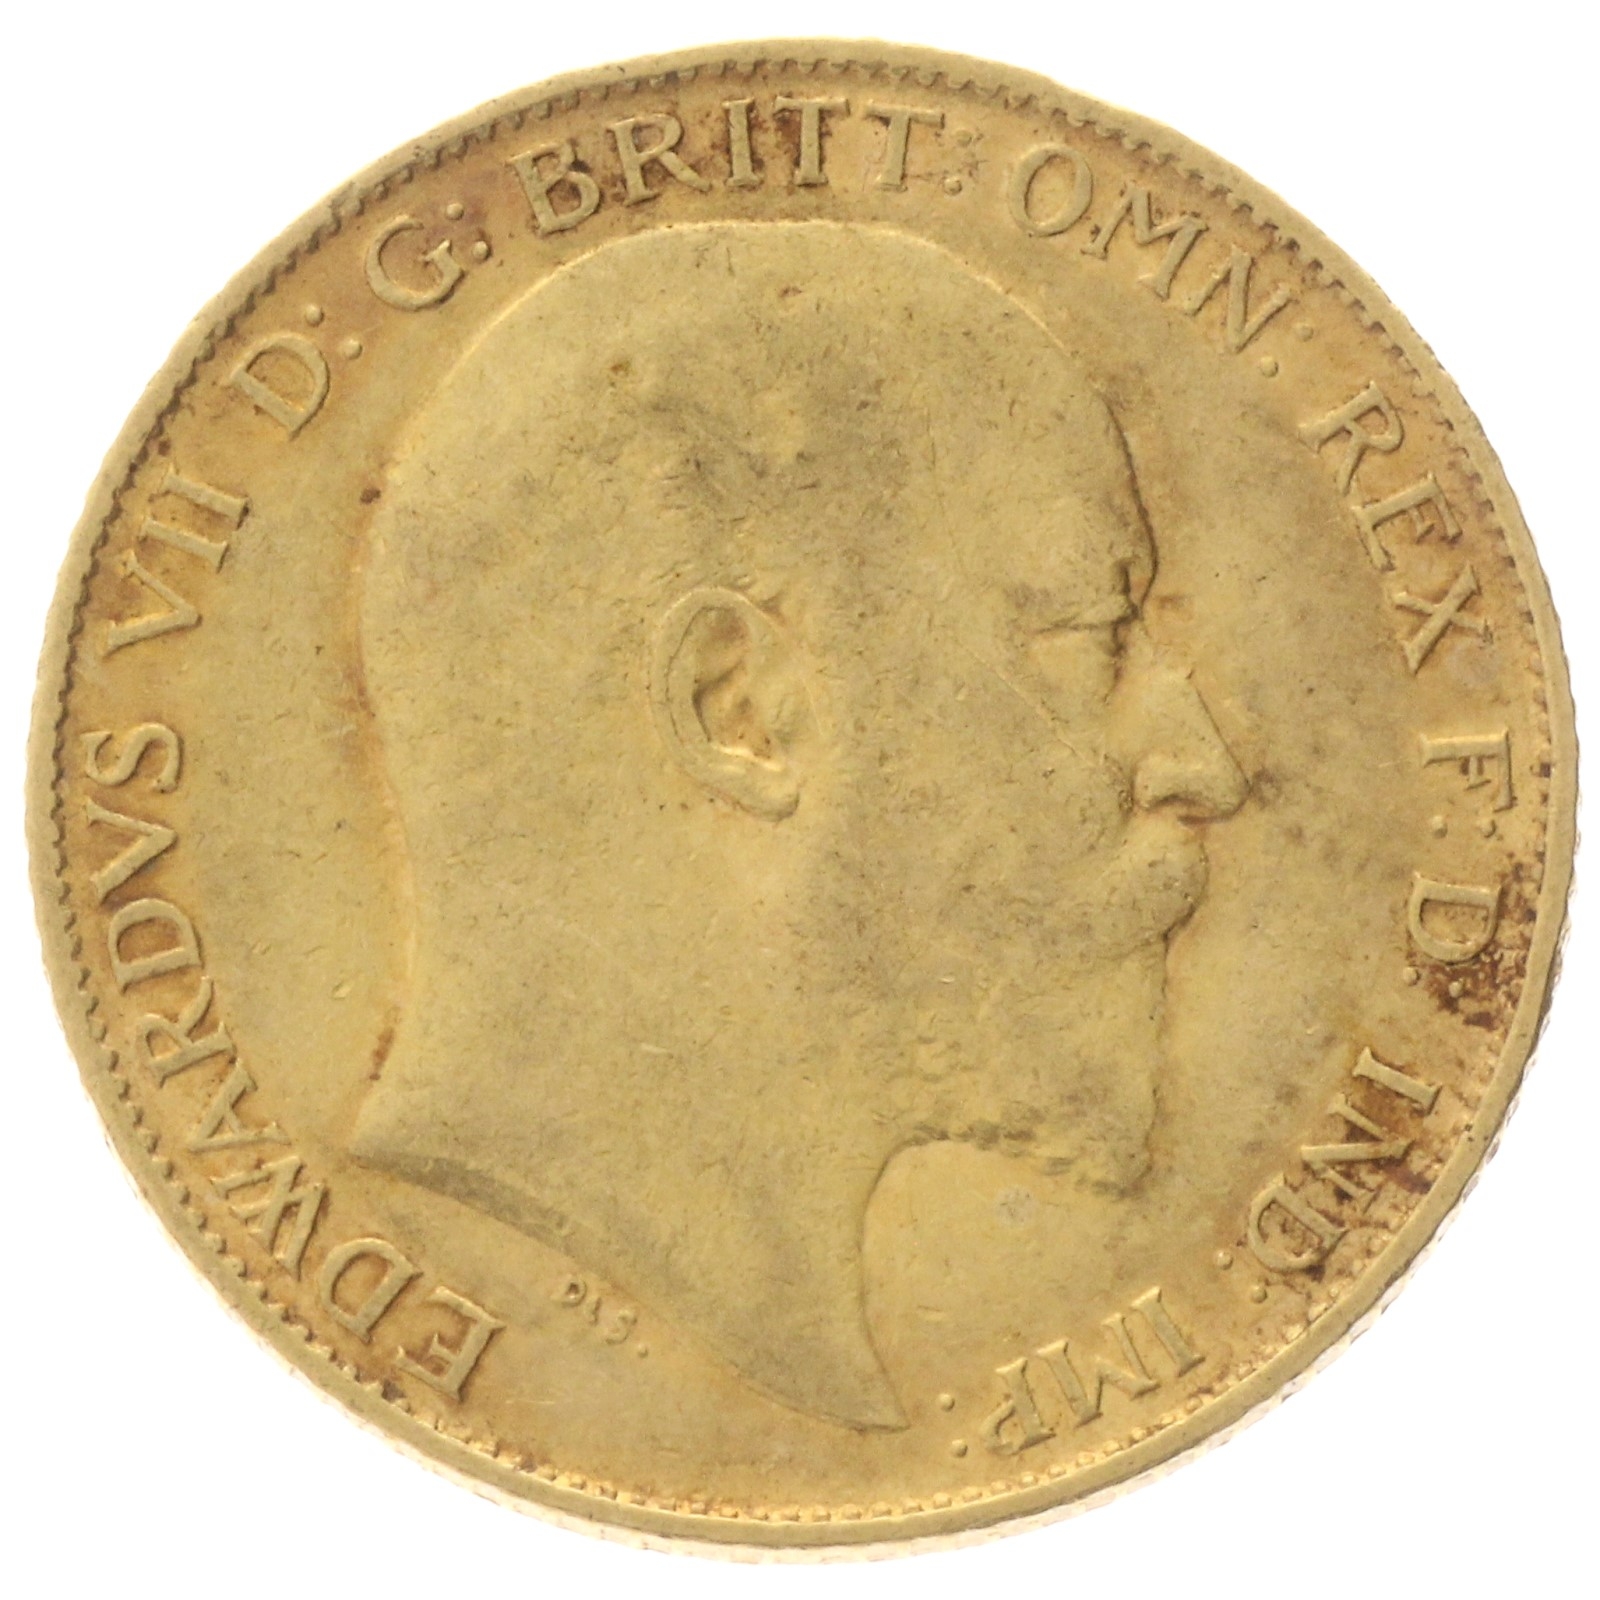 United Kingdom - 1/2 sovereign - 1902 - Edward VII 